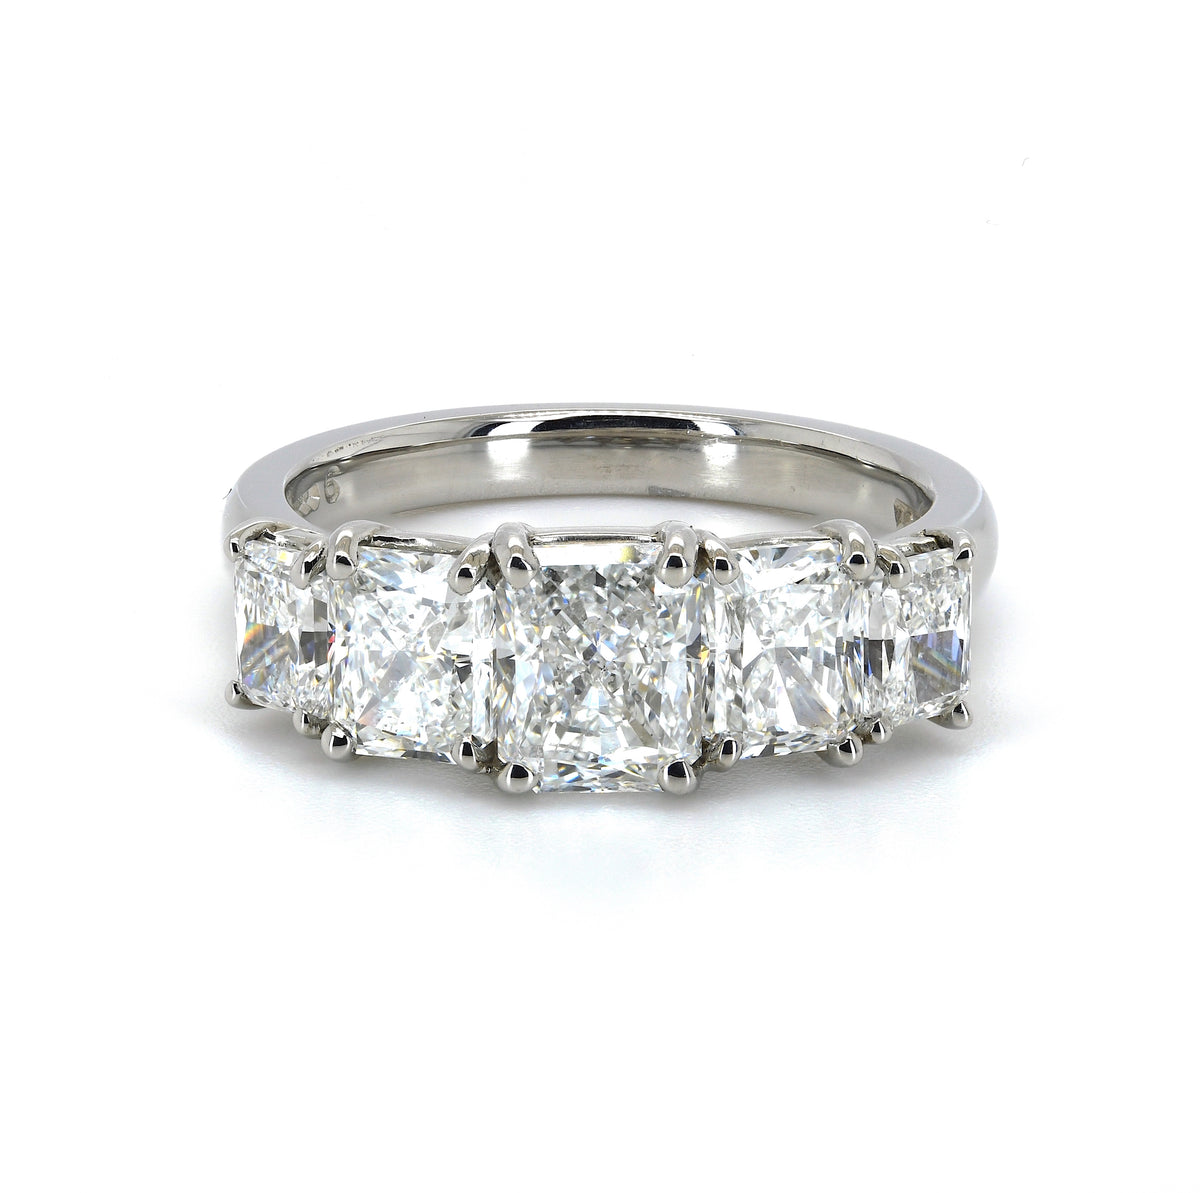 5 Stone Diamonds Unique Ring Radiant cut 3.41 ct in Total in Platinum 950 GIA Certified